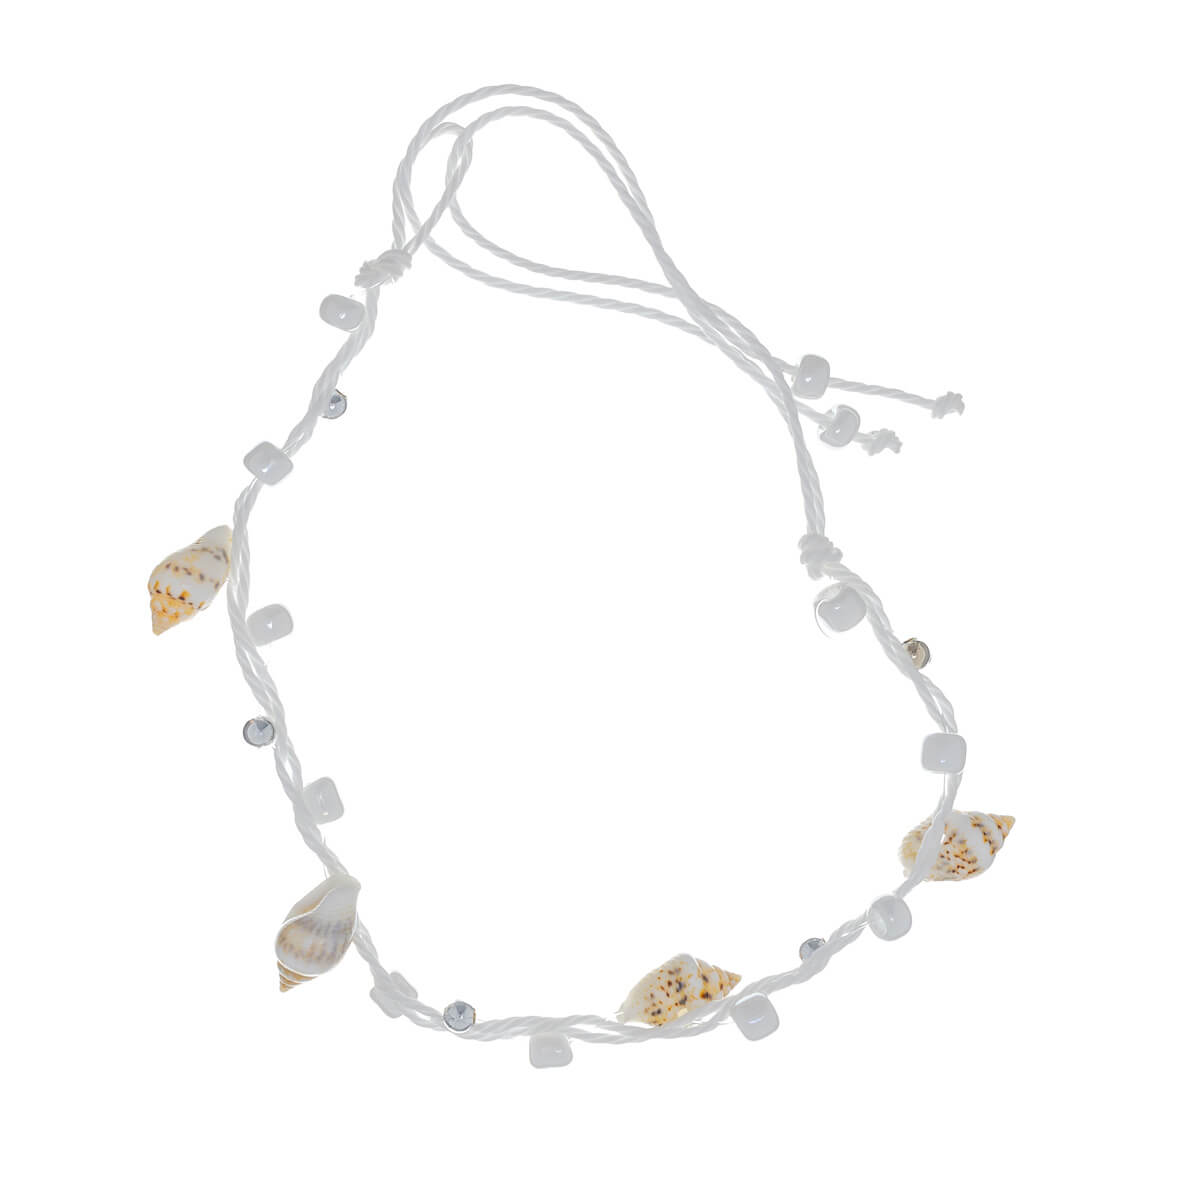 Knotted seashell ankle chain / seashell bracelet